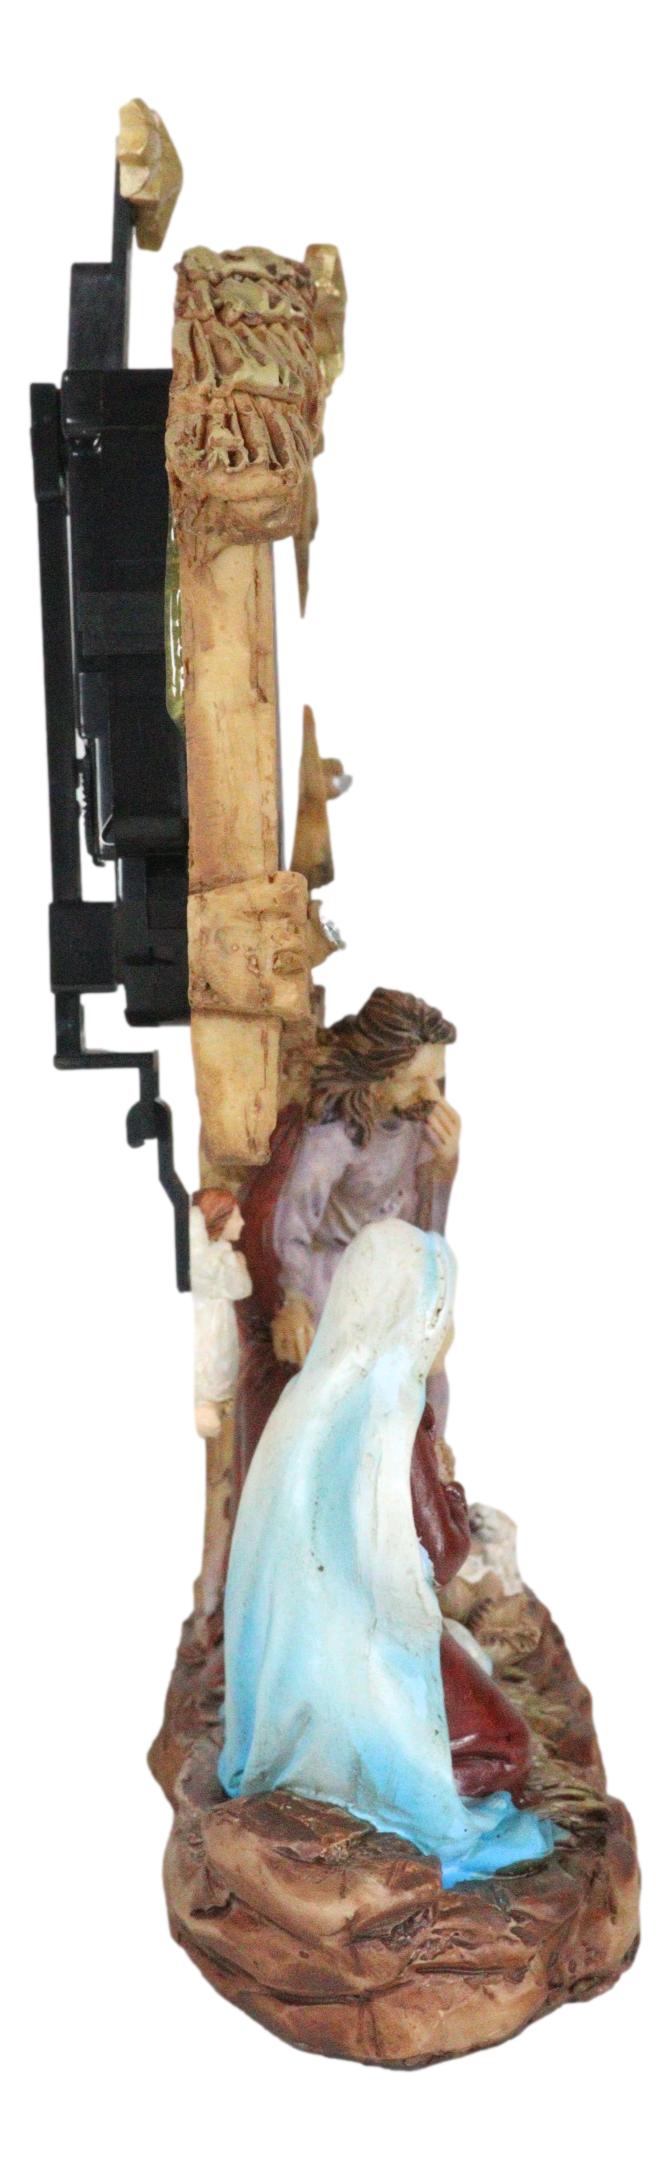 Holy Family Nativity Mary Joseph and Baby Jesus In Manger Pendulum Table Clock